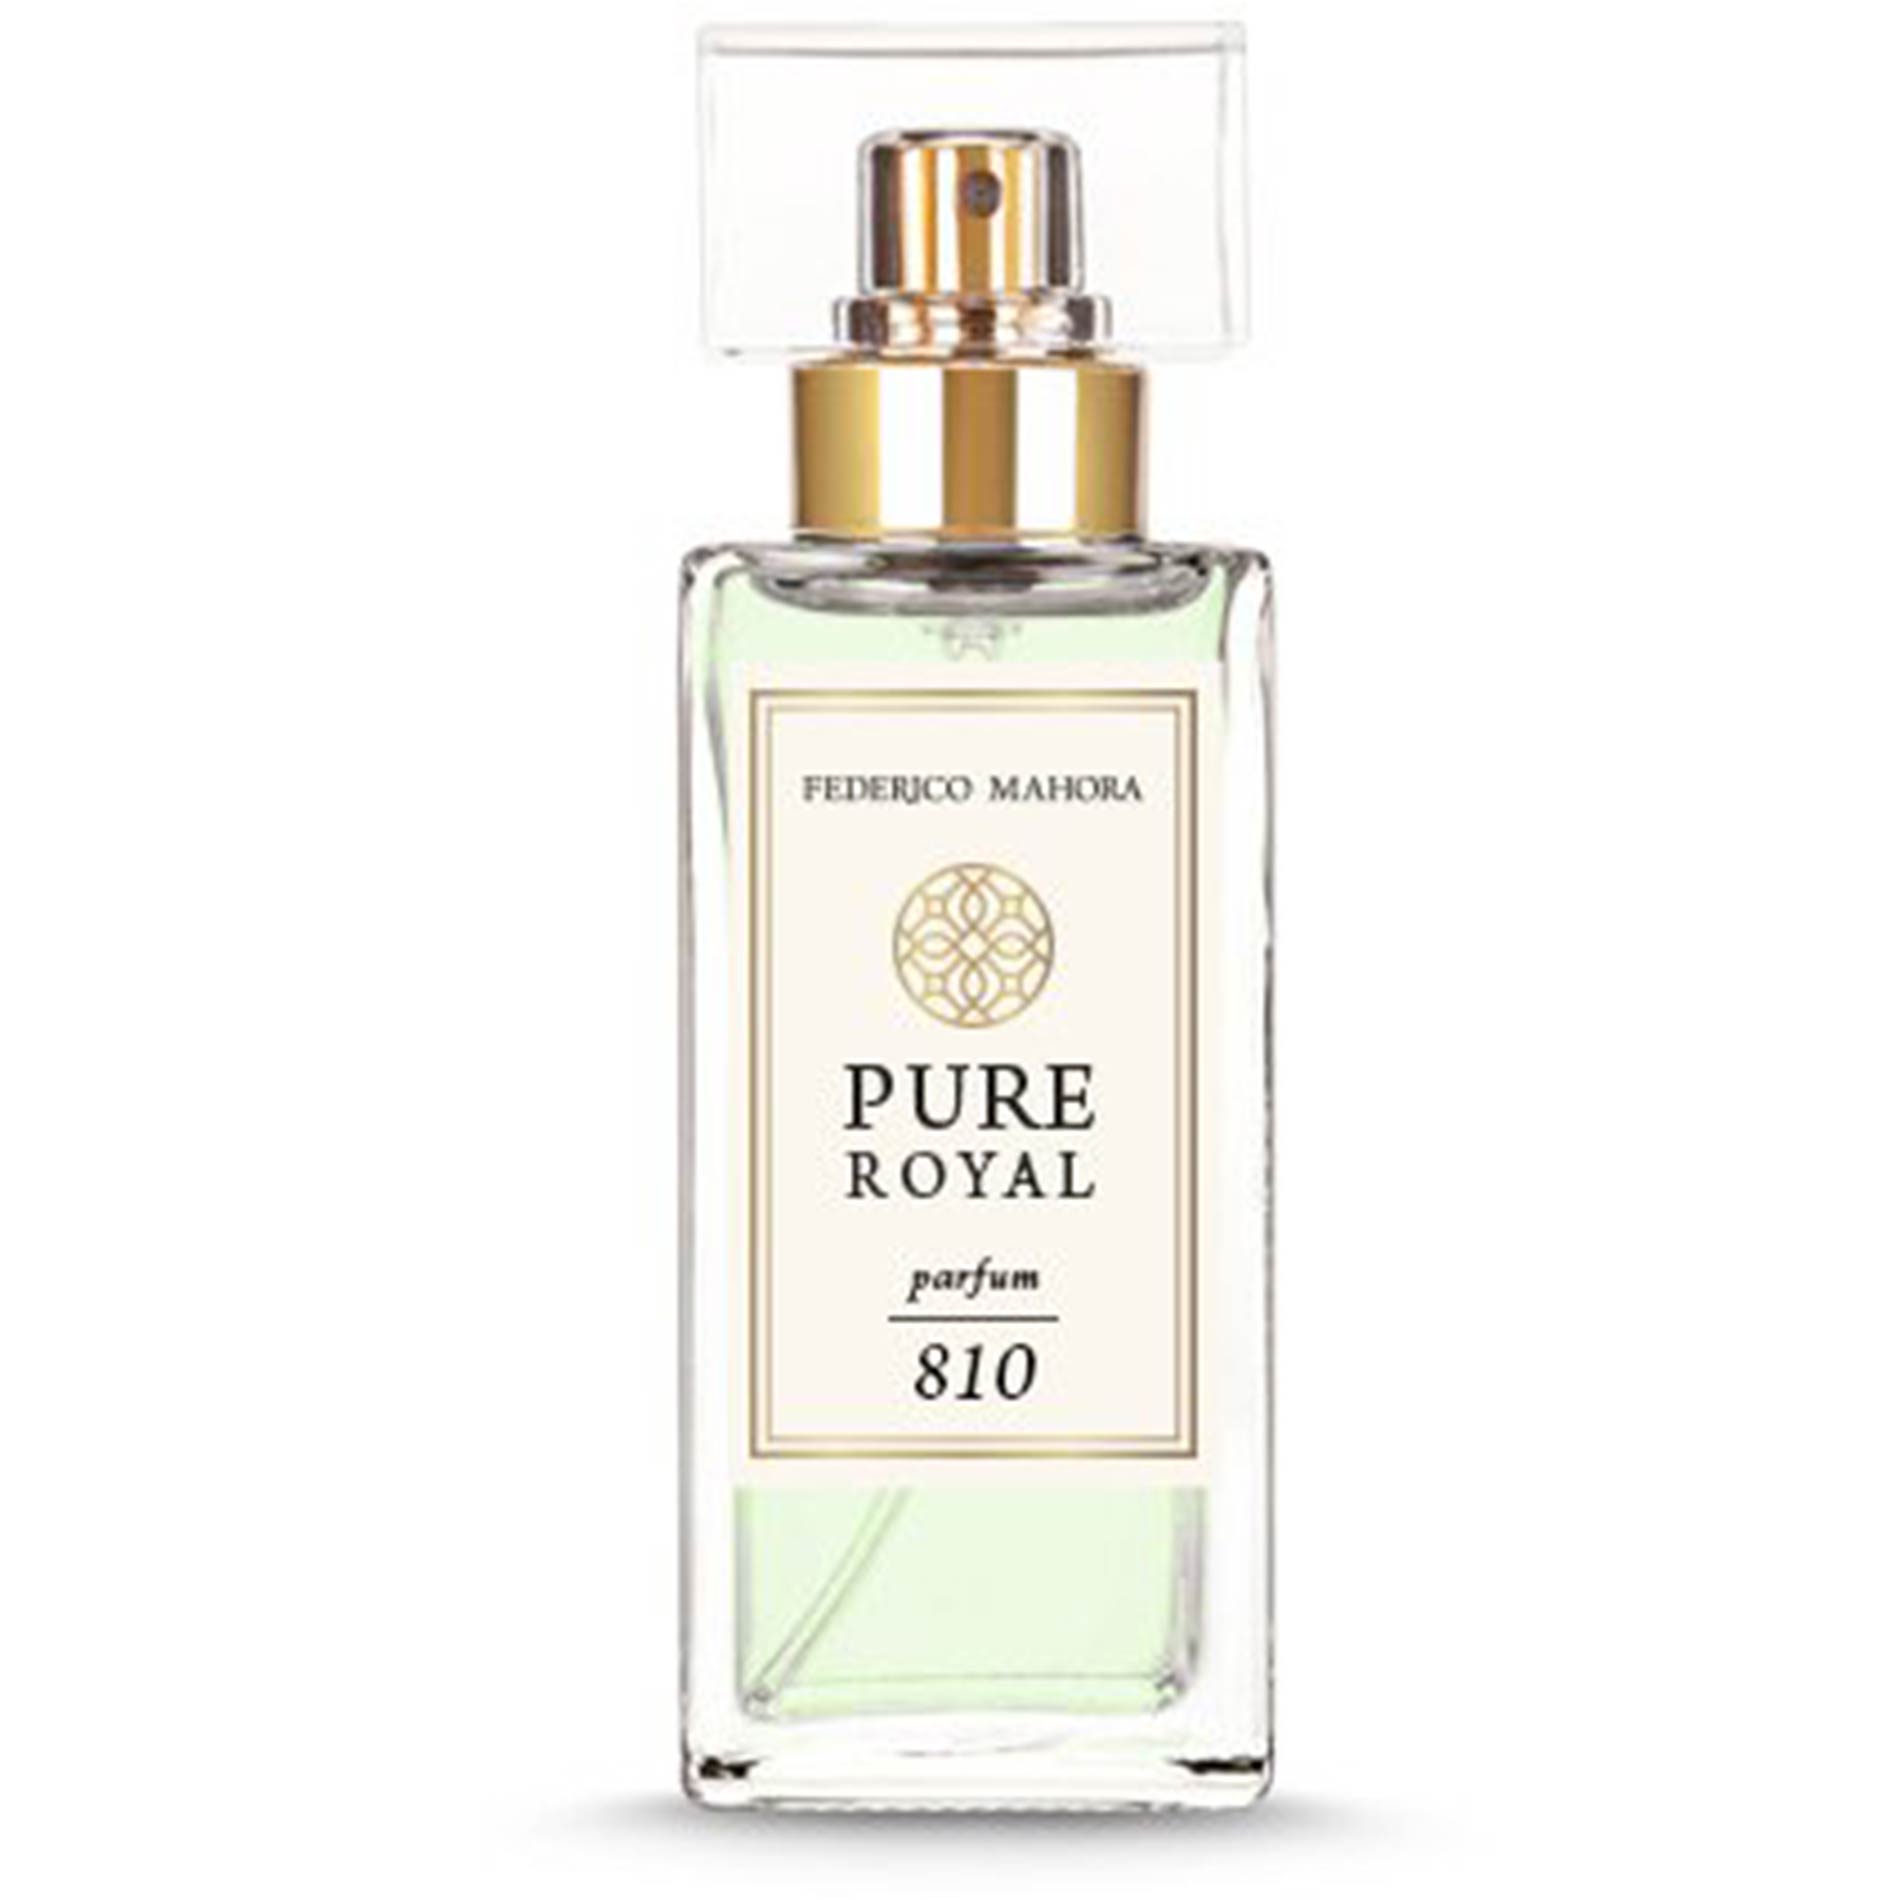 PURE ROYAL 810 Parfum Federico Mahora